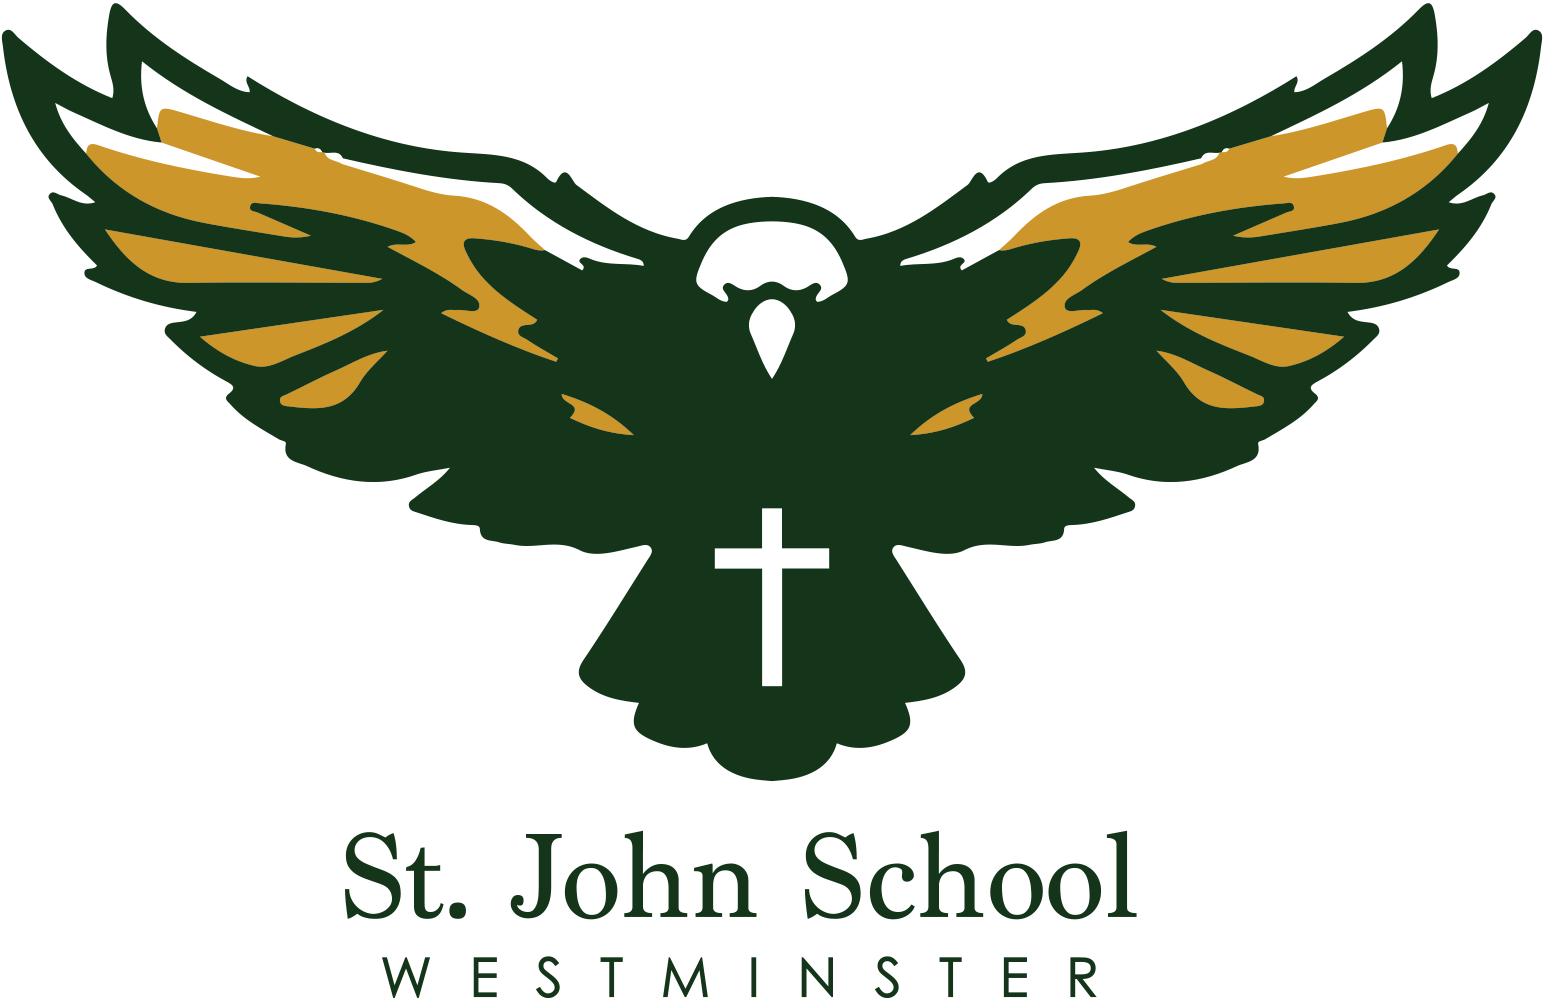 St. John Catholic School in Westminster, Maryland